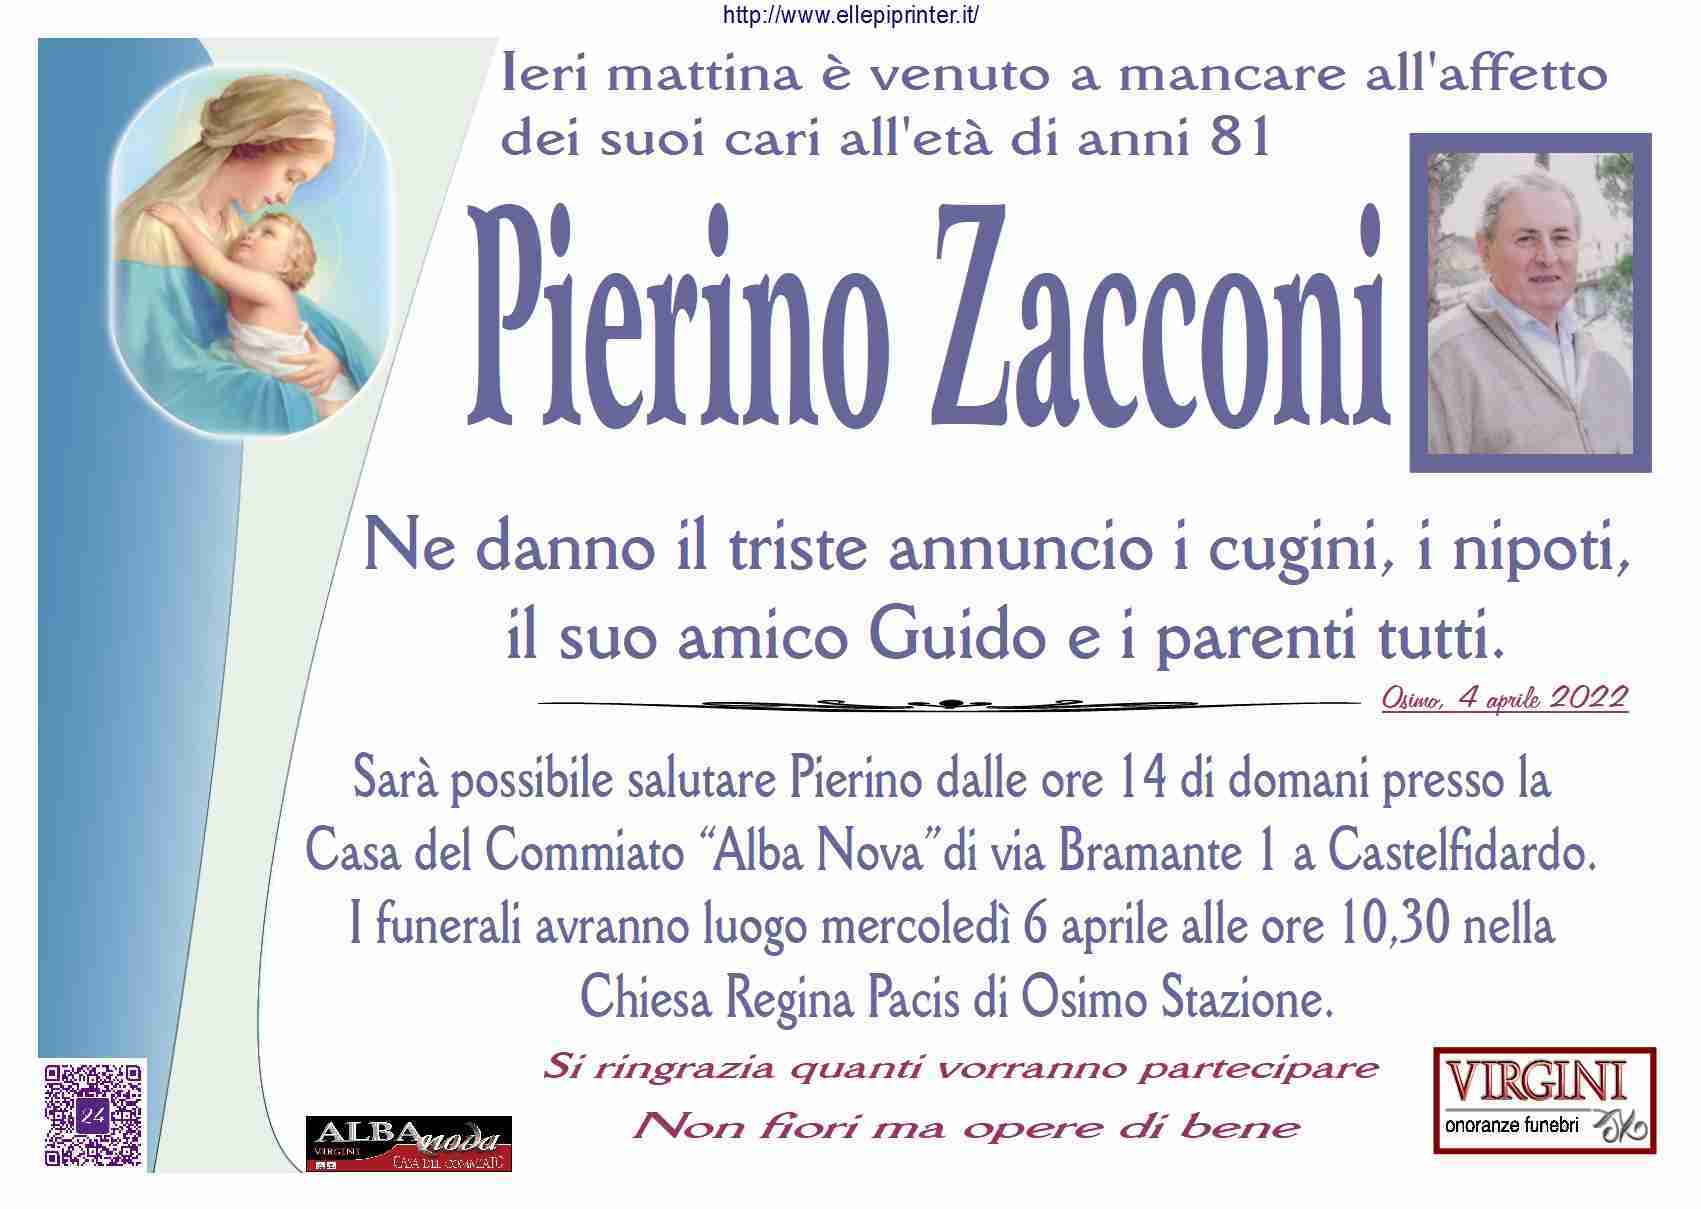 Pierino Zacconi